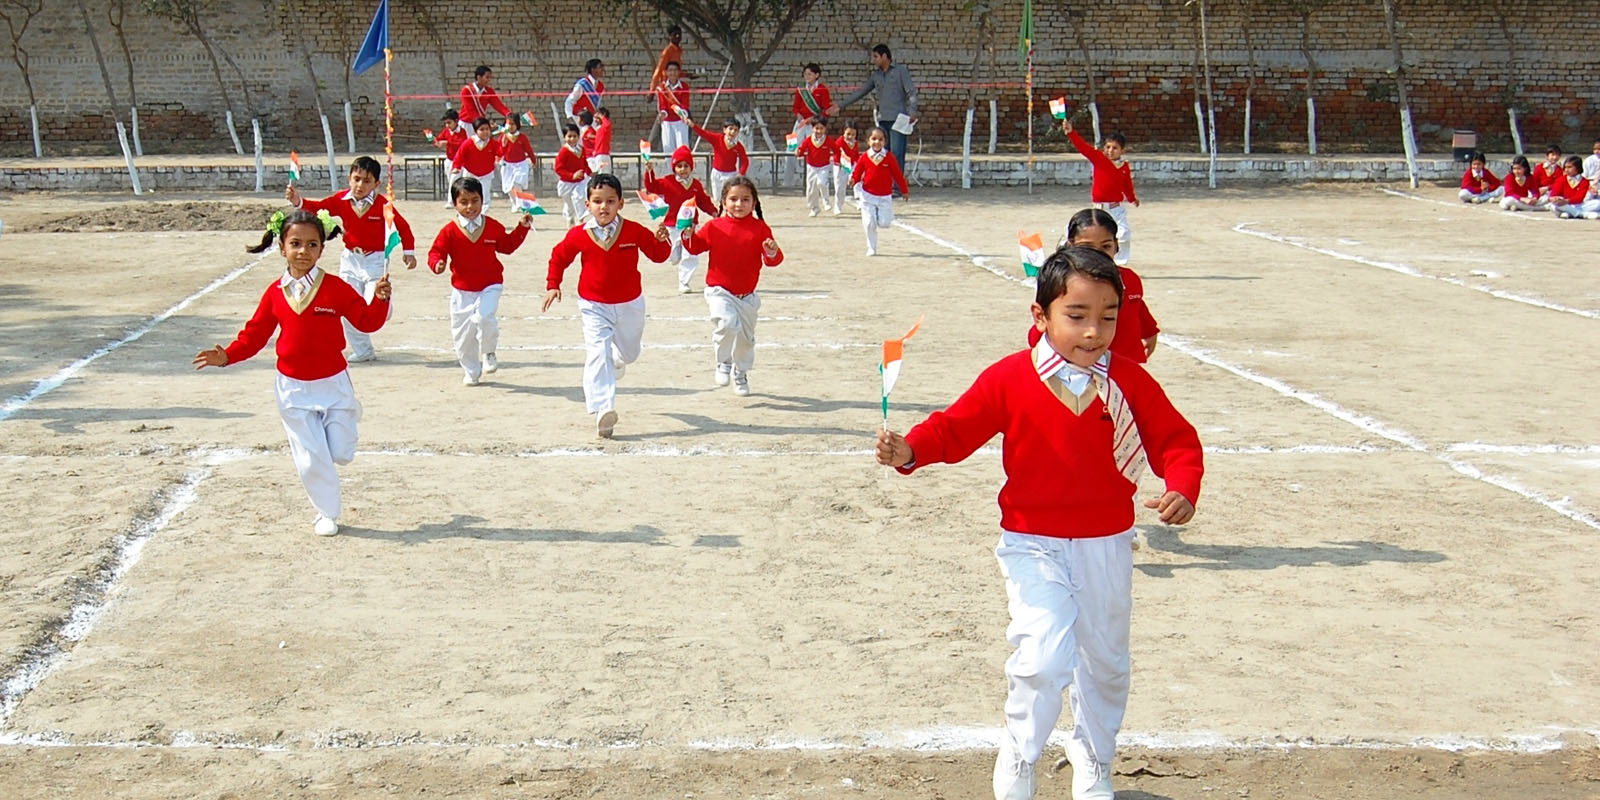 Chanakya School Fazilka Sports Day